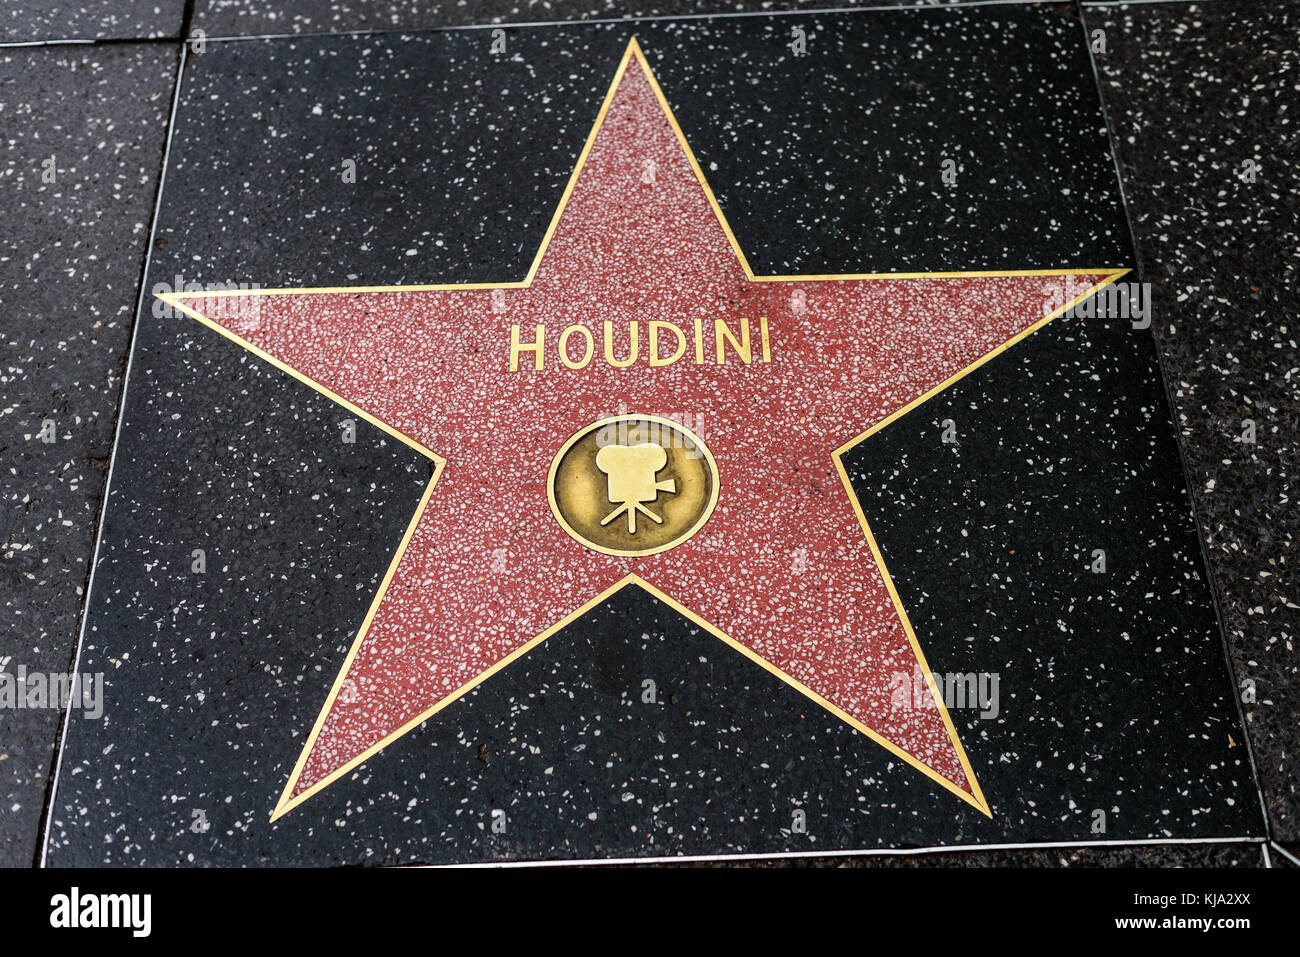 HOLLYWOOD, CA - DEZEMBER 06: Houdini-Star auf dem Hollywood Walk of Fame in Hollywood, Kalifornien am 6. Dezember 2016. Stockfoto